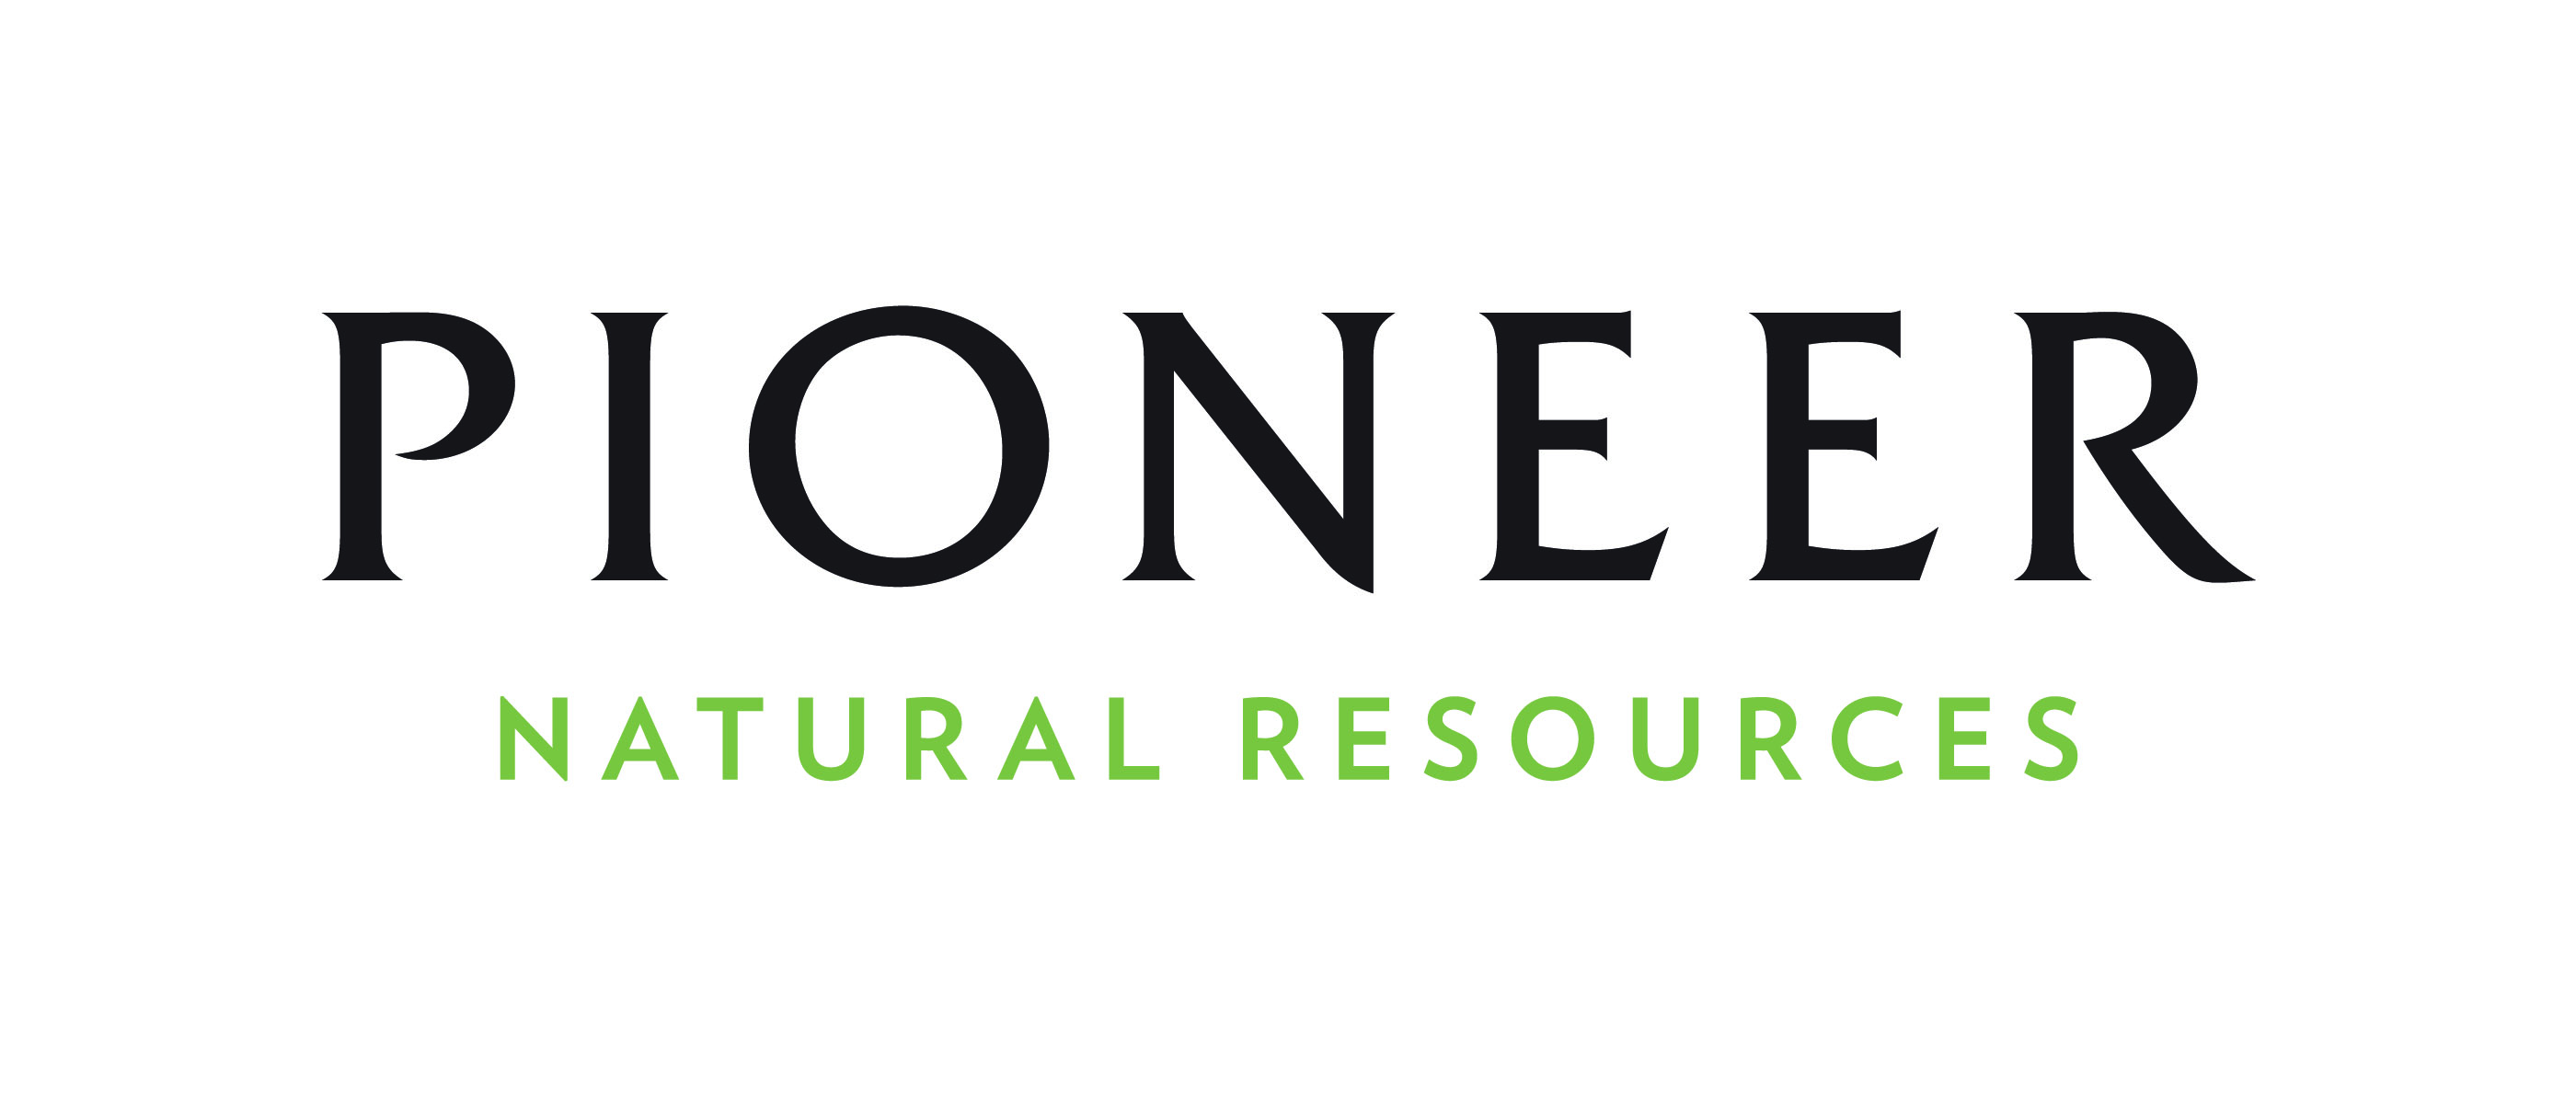 PioneerNaturalResources-spaced-Logo_Name-Only_Black+Green.jpg